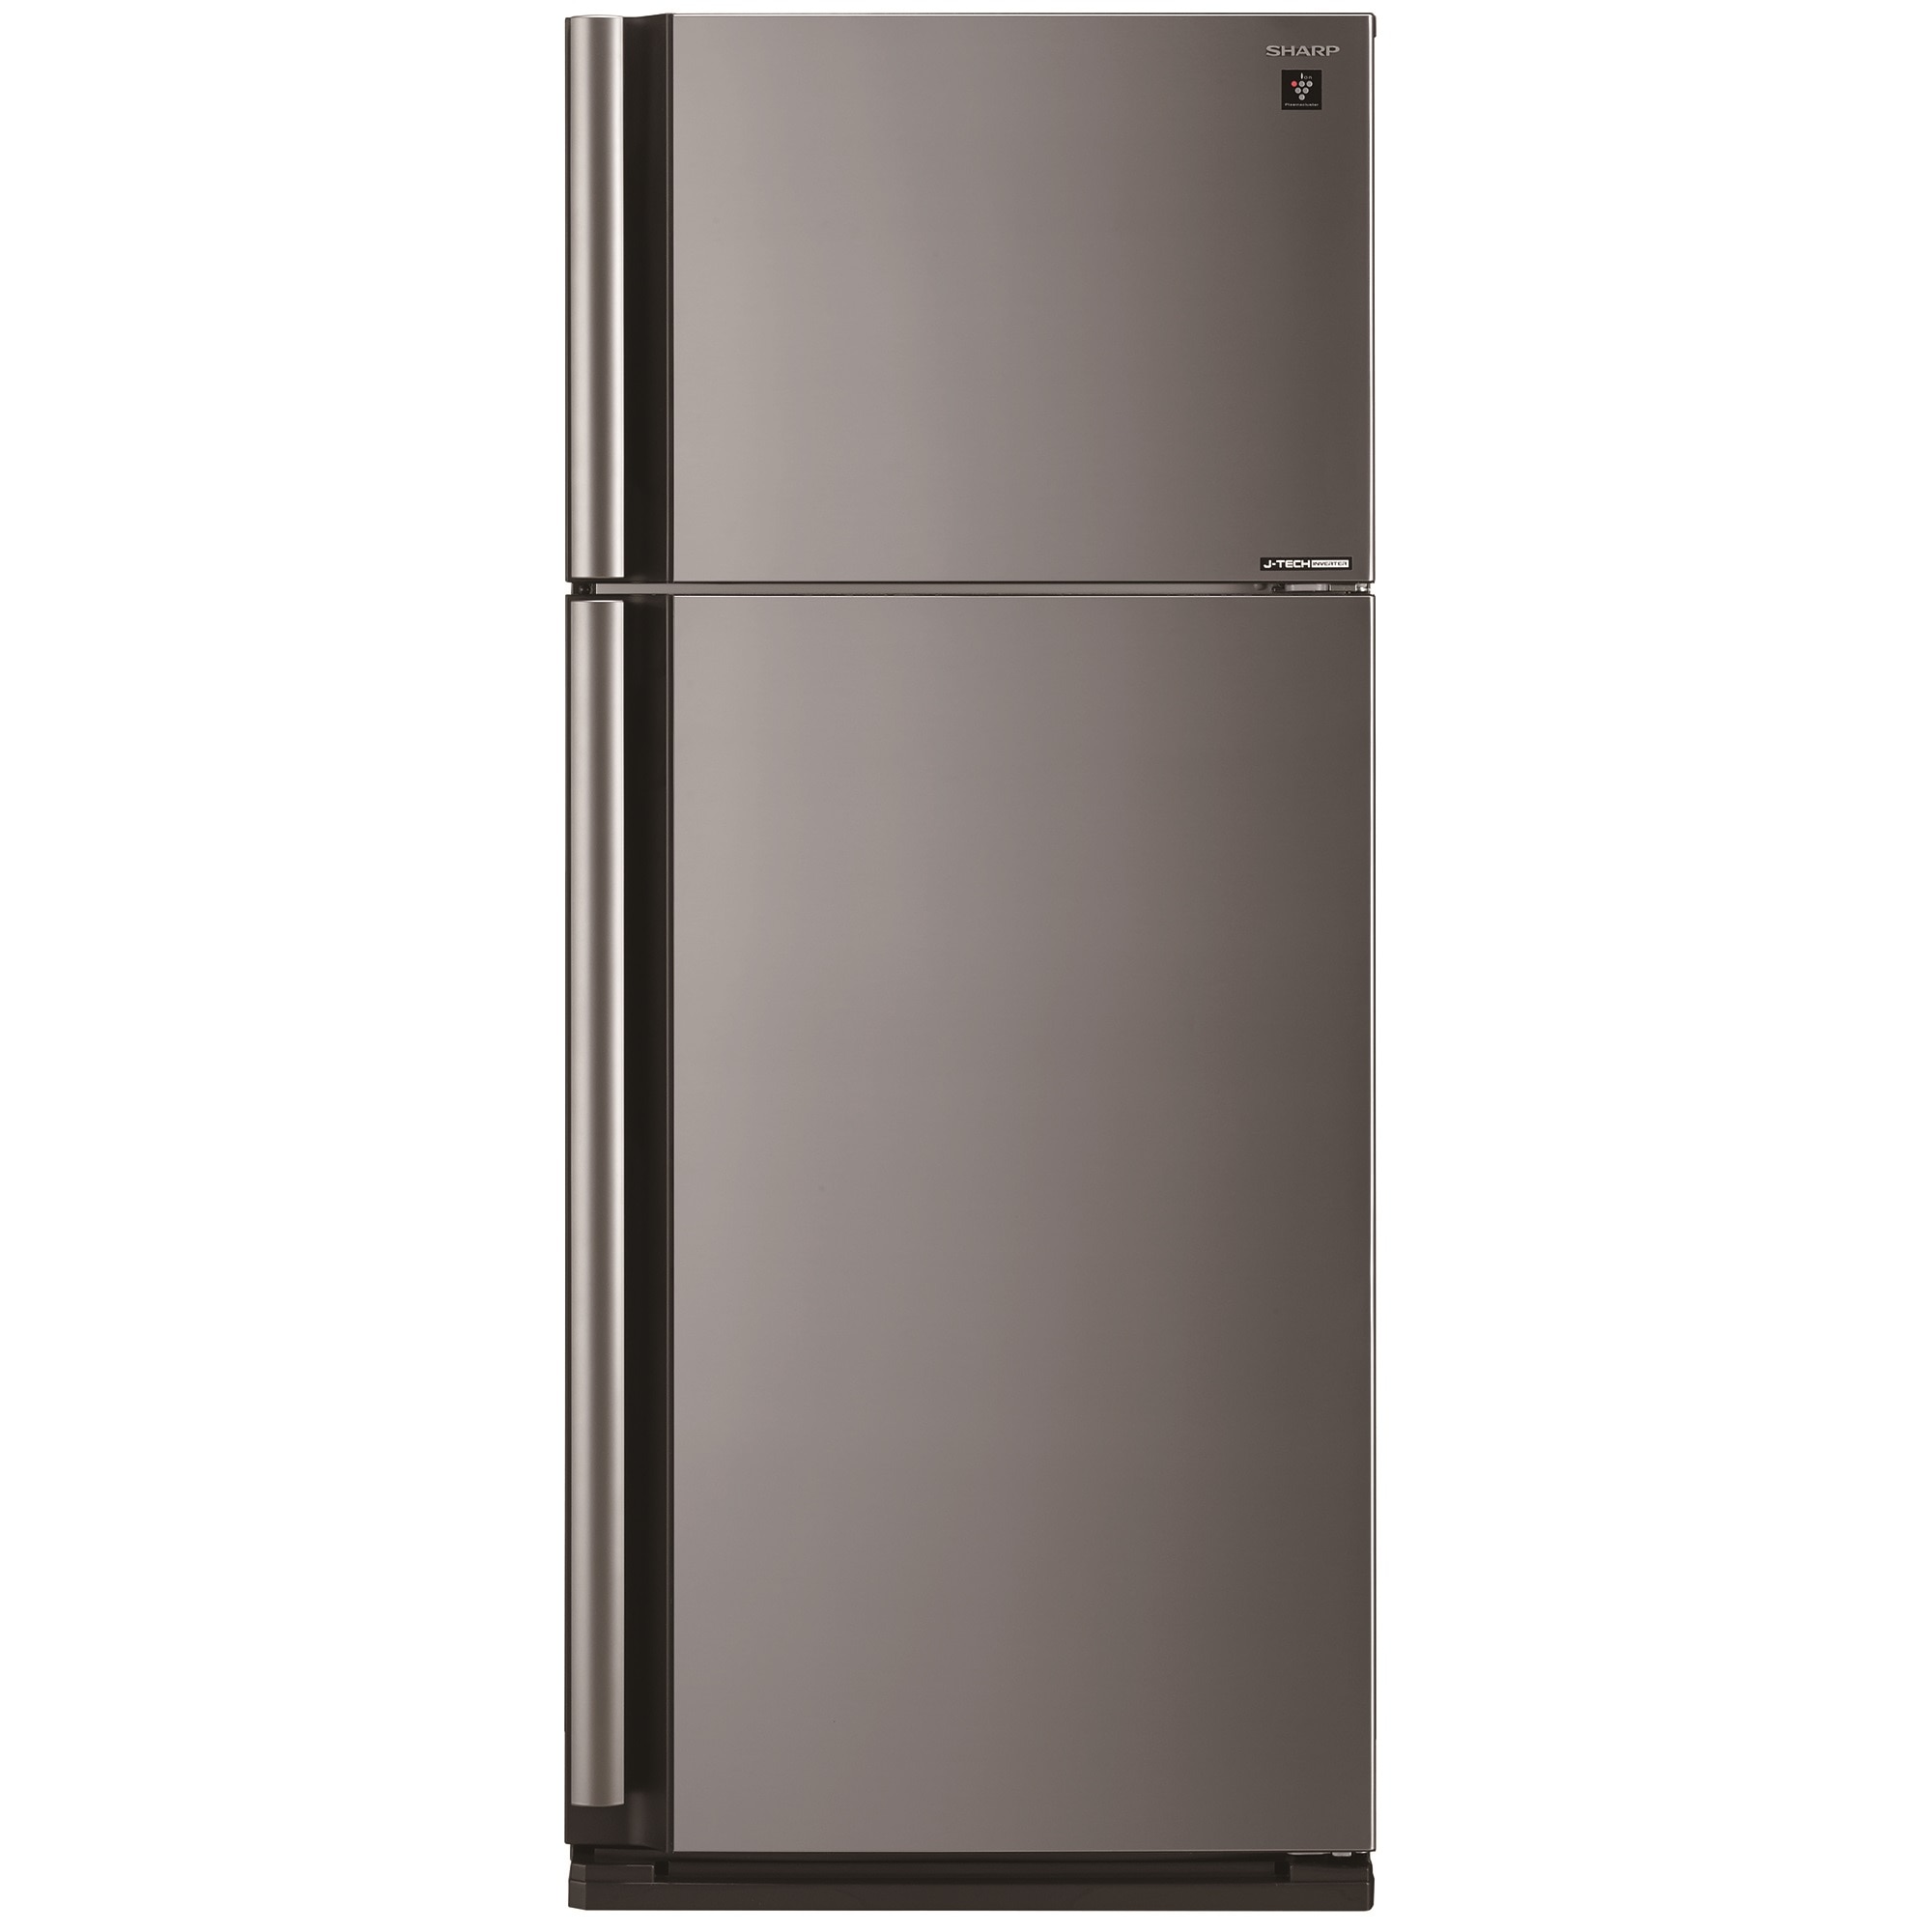 Хладилник Sharp SJXE700MSL с обем от 578 л.